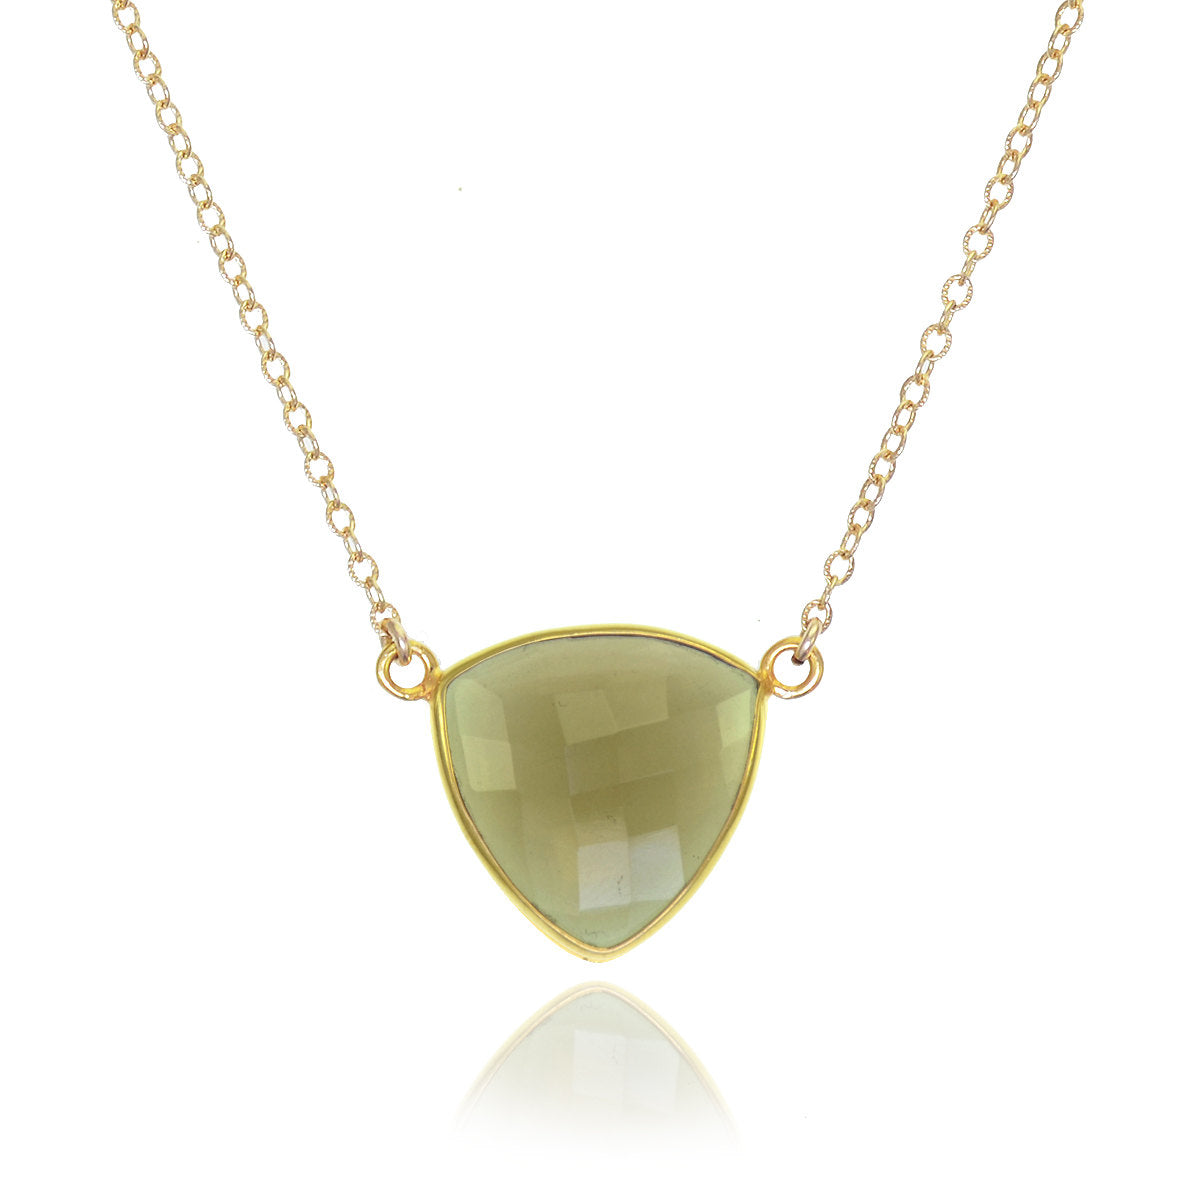 Smoky Quartz Necklace - Gemstone Necklace - Pendant Gold Filled Necklace - Layered Necklace - Gem Charm Necklace